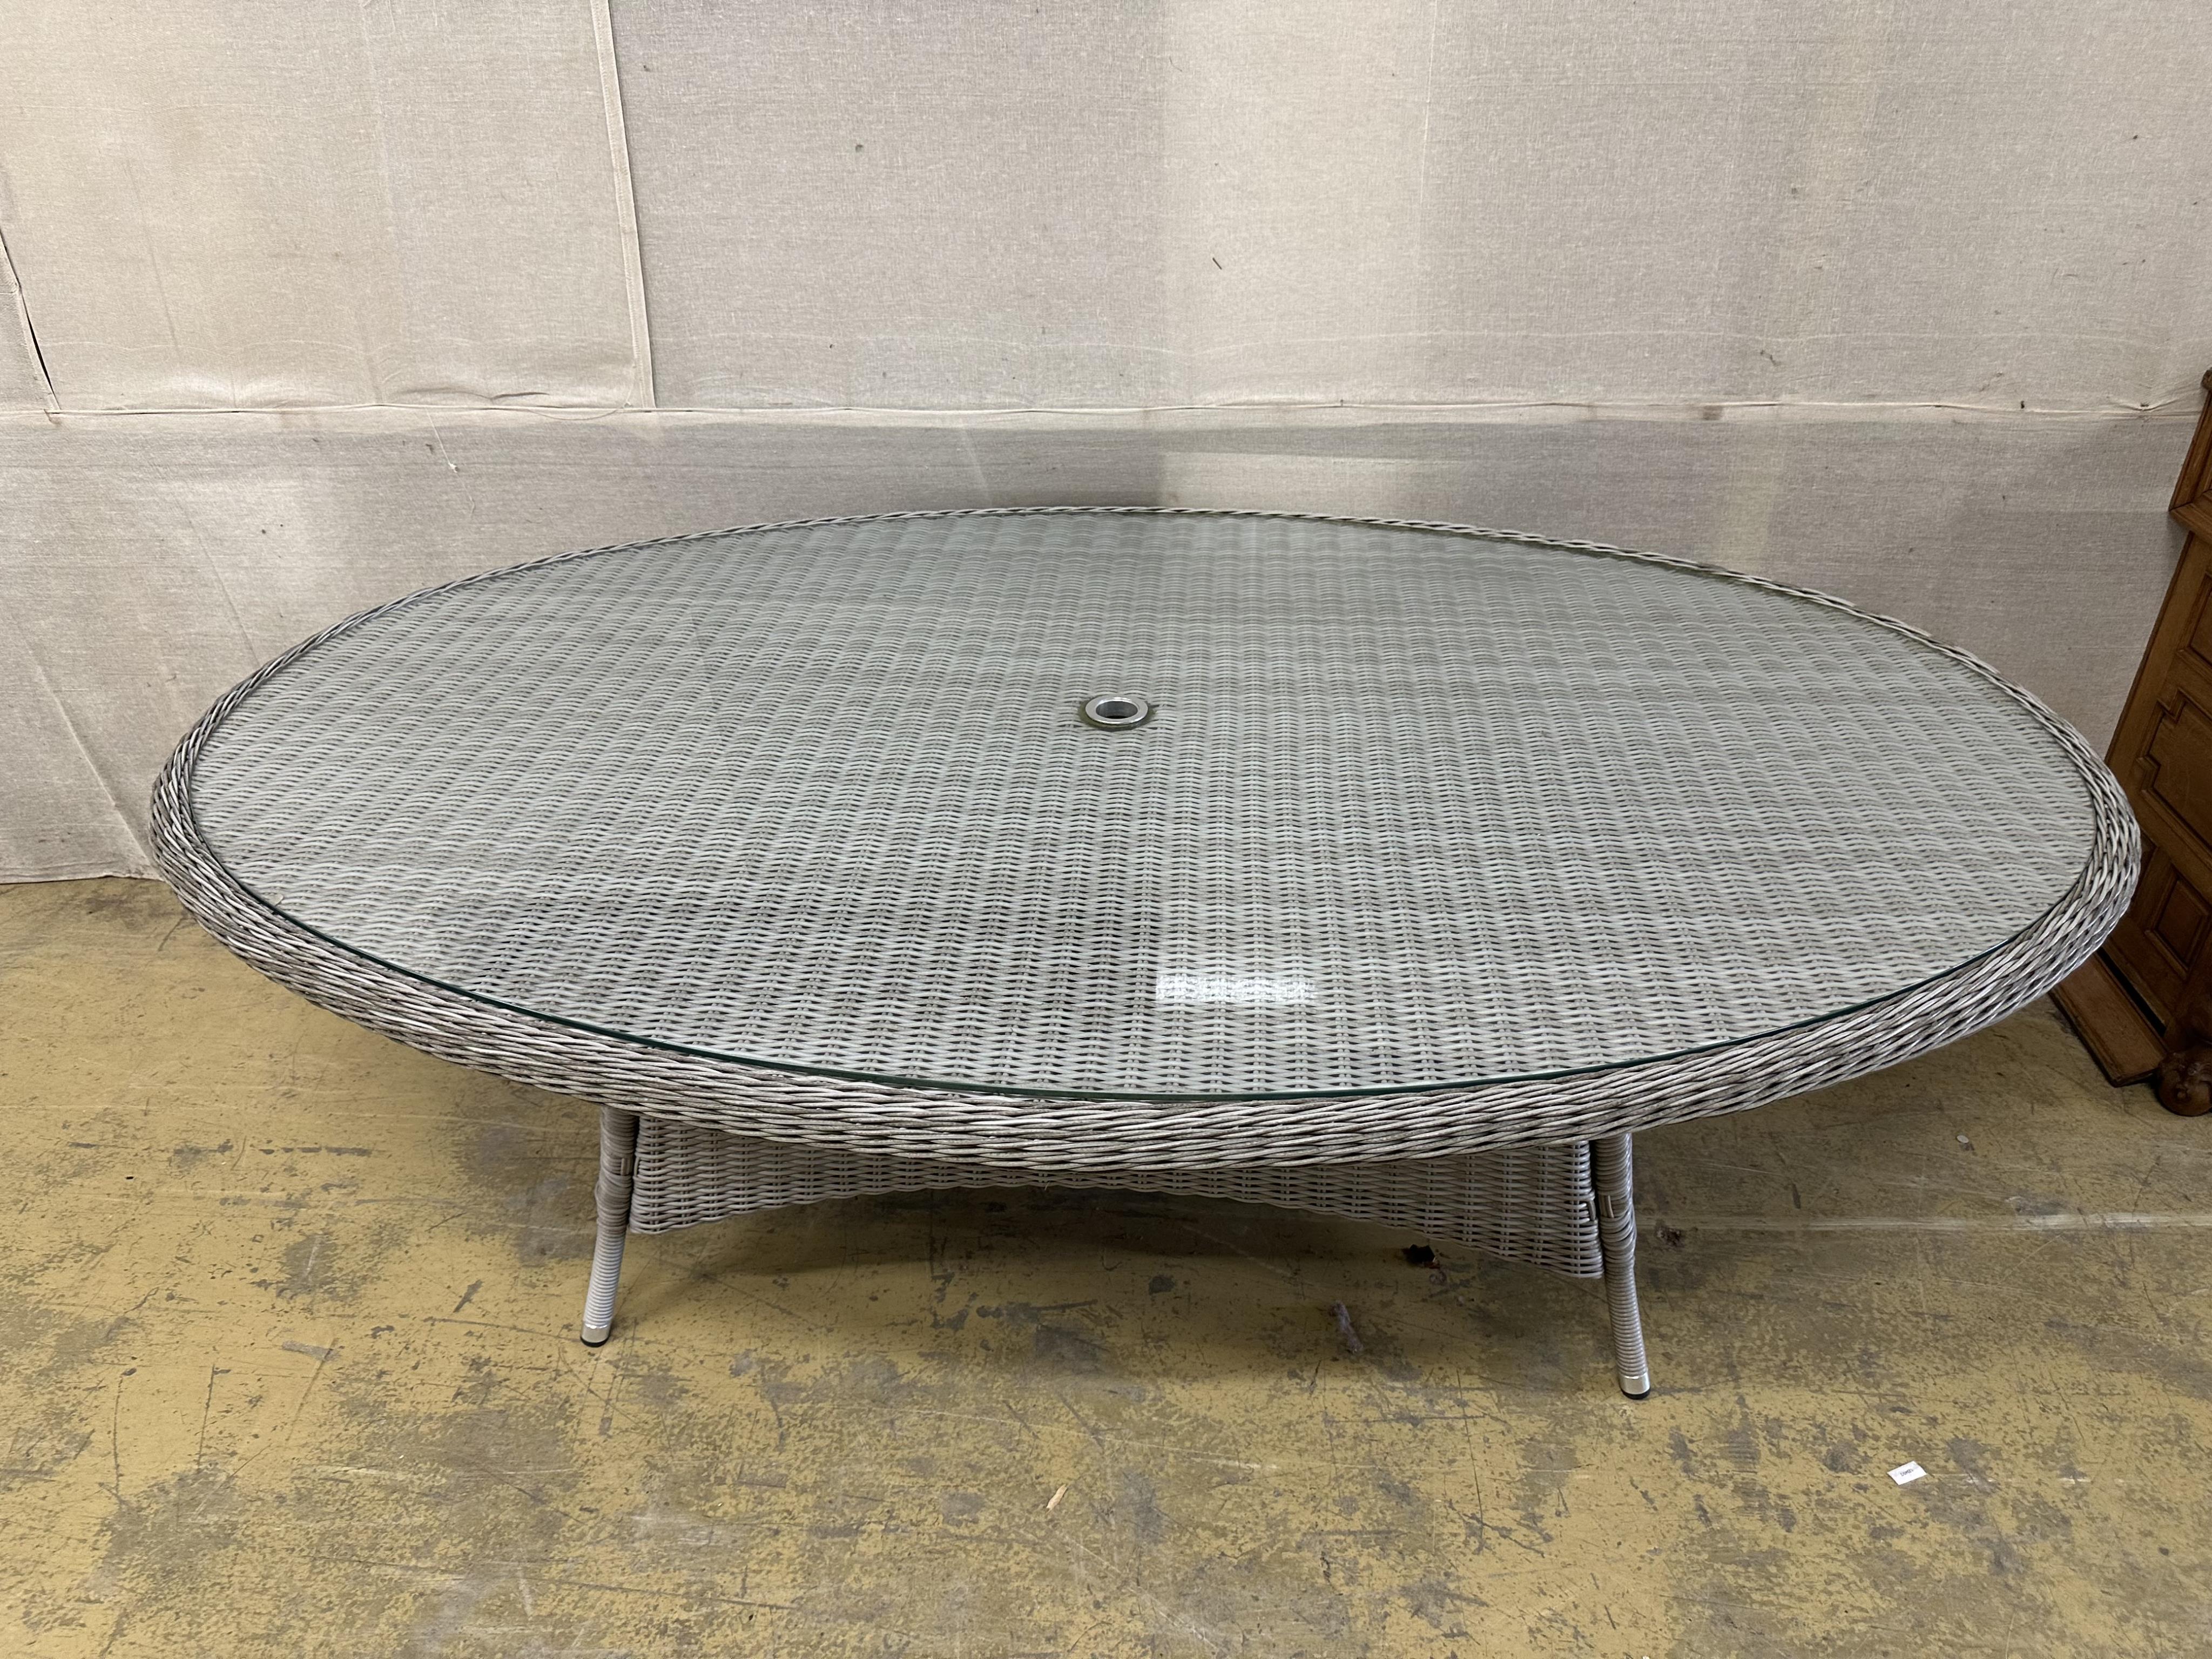 A Bramblecrest oval all weather rattan garden table, width 220cm, depth 145cm, height 73cm. Condition - good